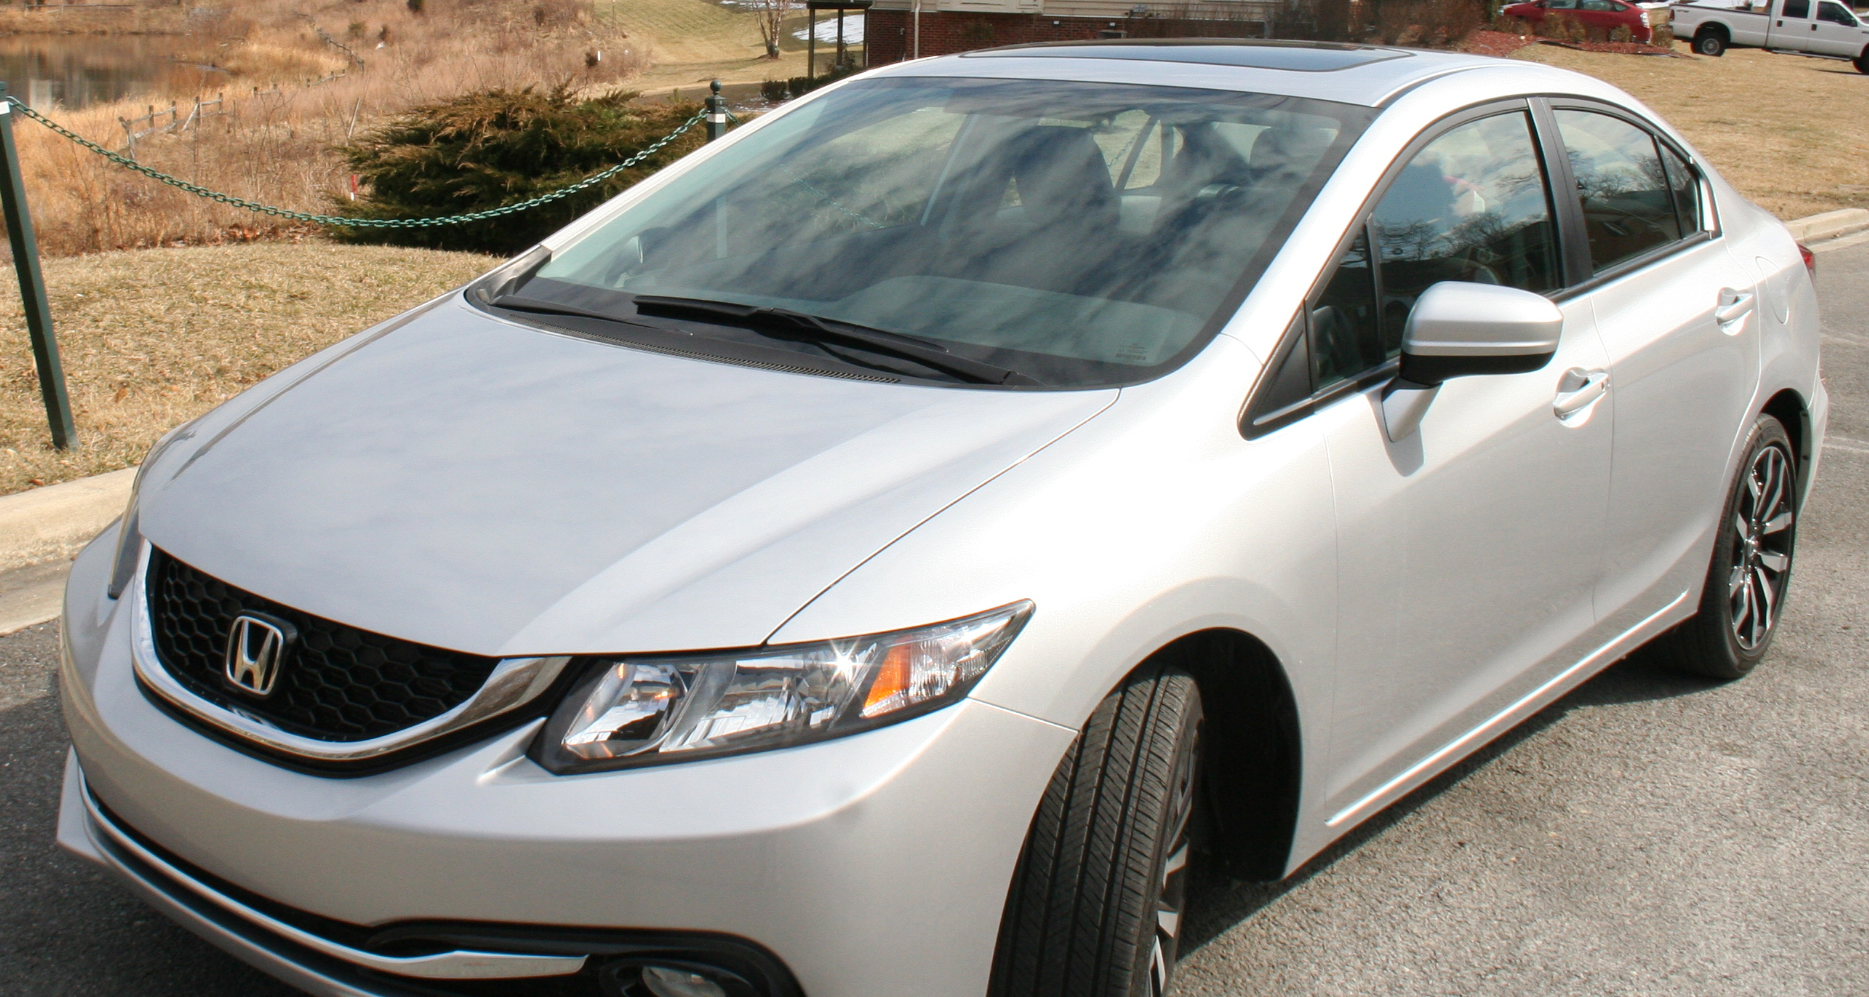 Car Report: Honda Civic moves ahead of the class